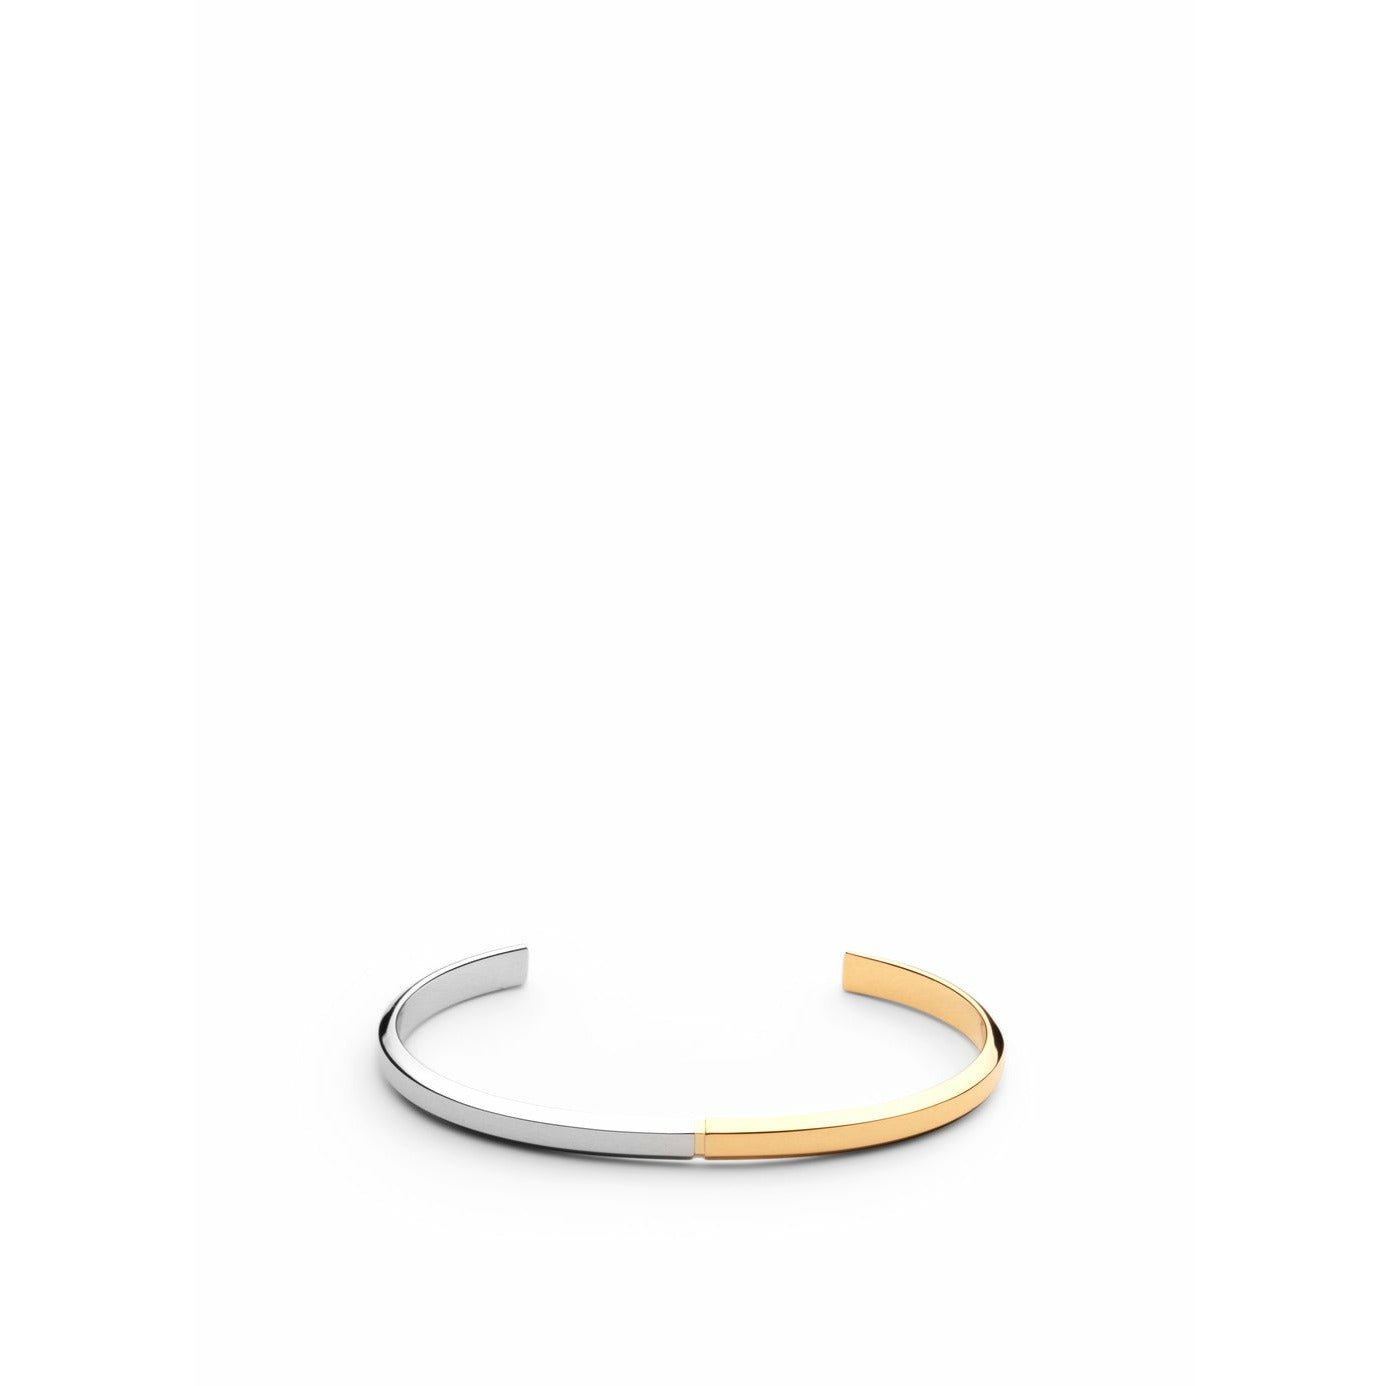 Skultuna Icon Dünnes Armband großer polierter Stahl/Gold plattiert, Ø18,5 cm